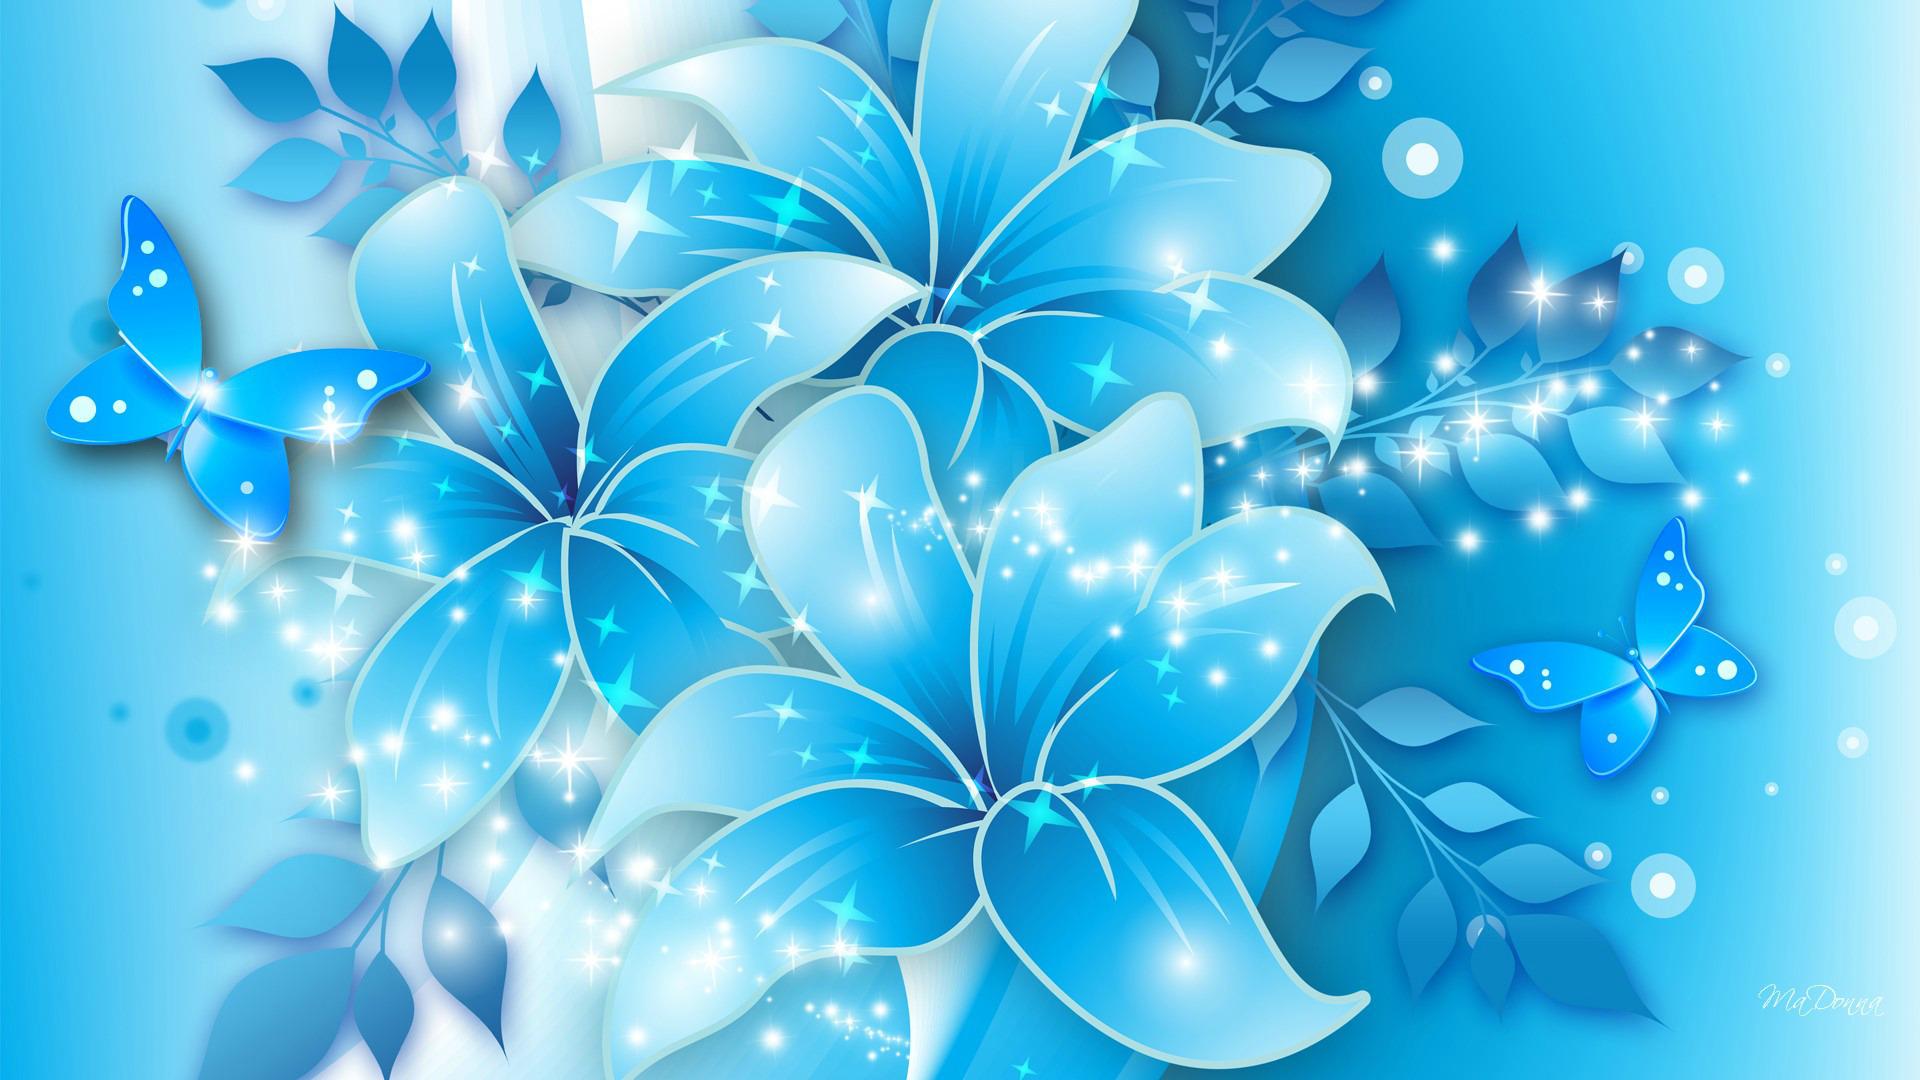 Blue Flower Backgrounds - Blue Flower Background Design - HD Wallpaper 